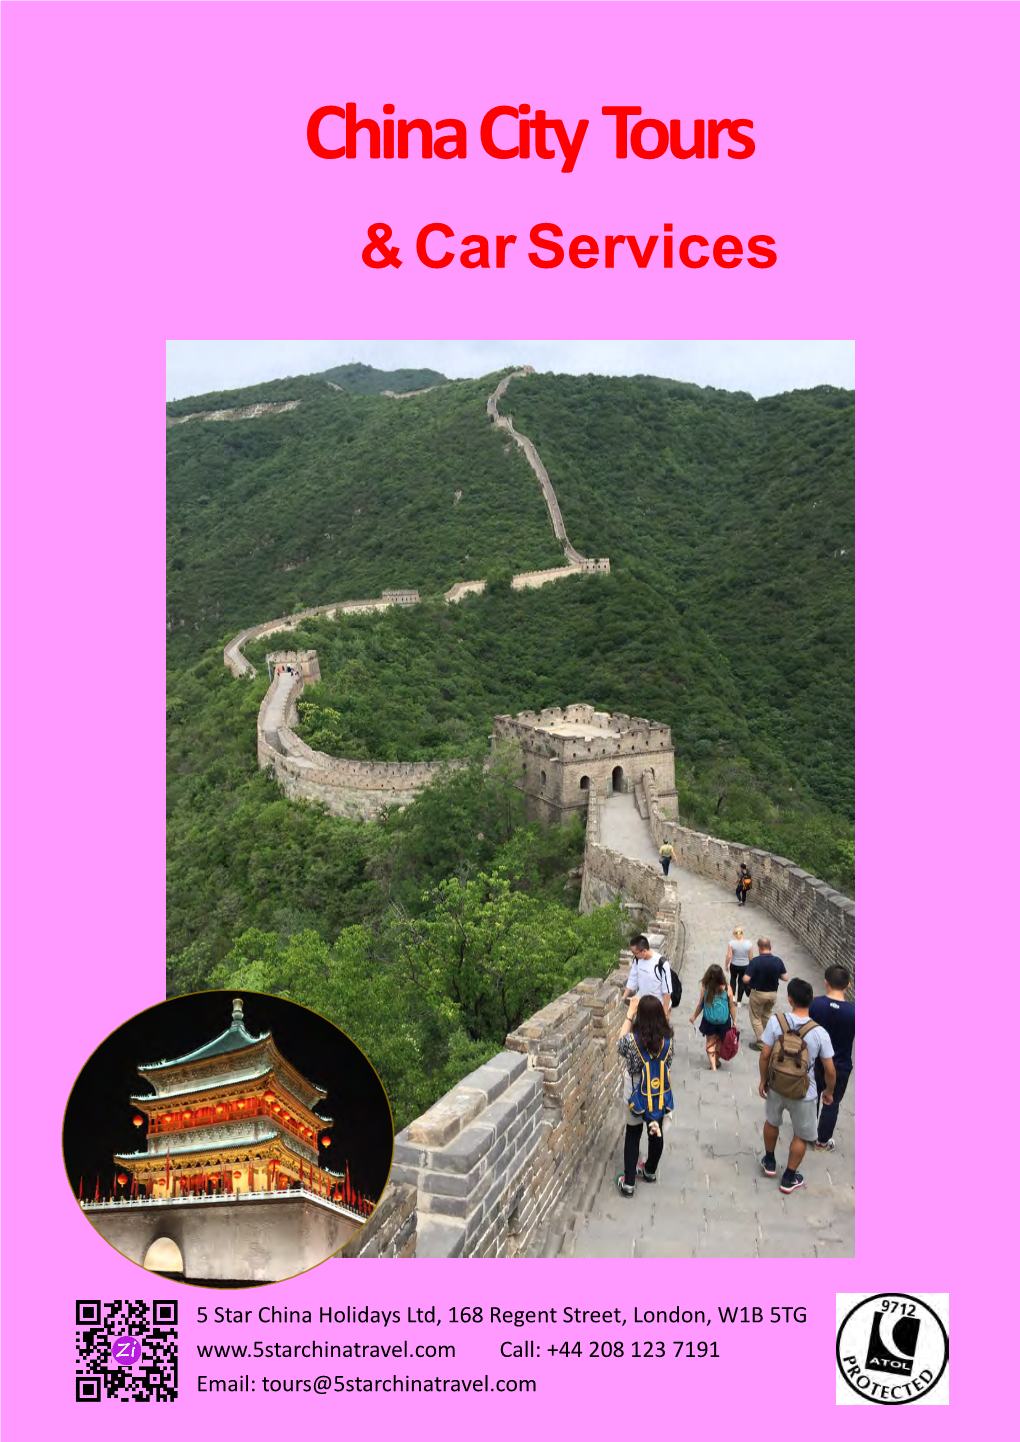 China City Tours & Car Services